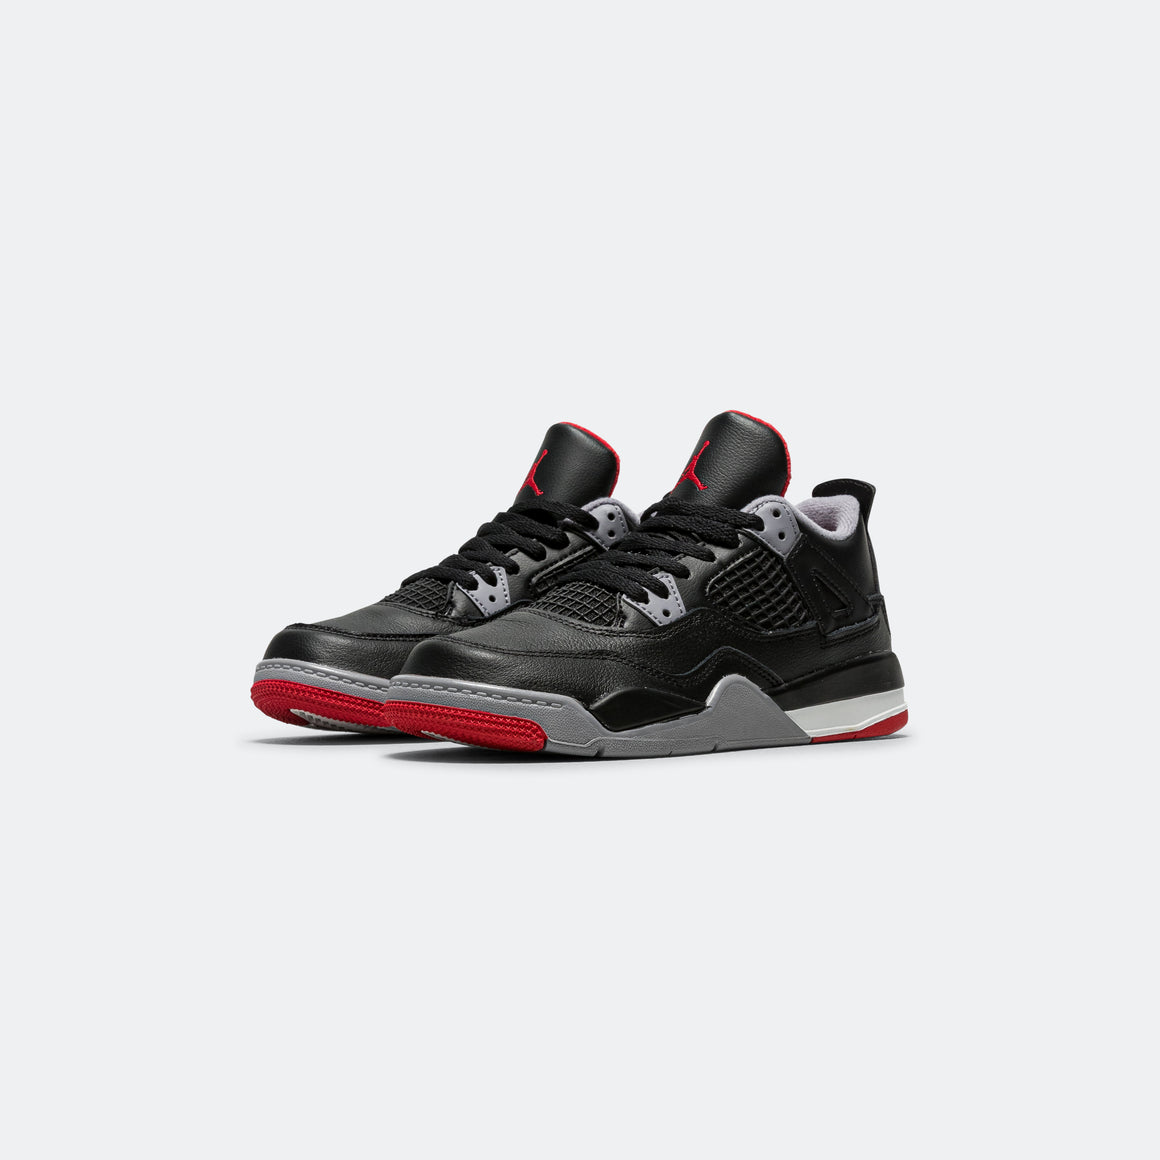 Jordan - Air Jordan 4 Retro (PS) - Black/Fire-Red Cement Grey - UP THERE